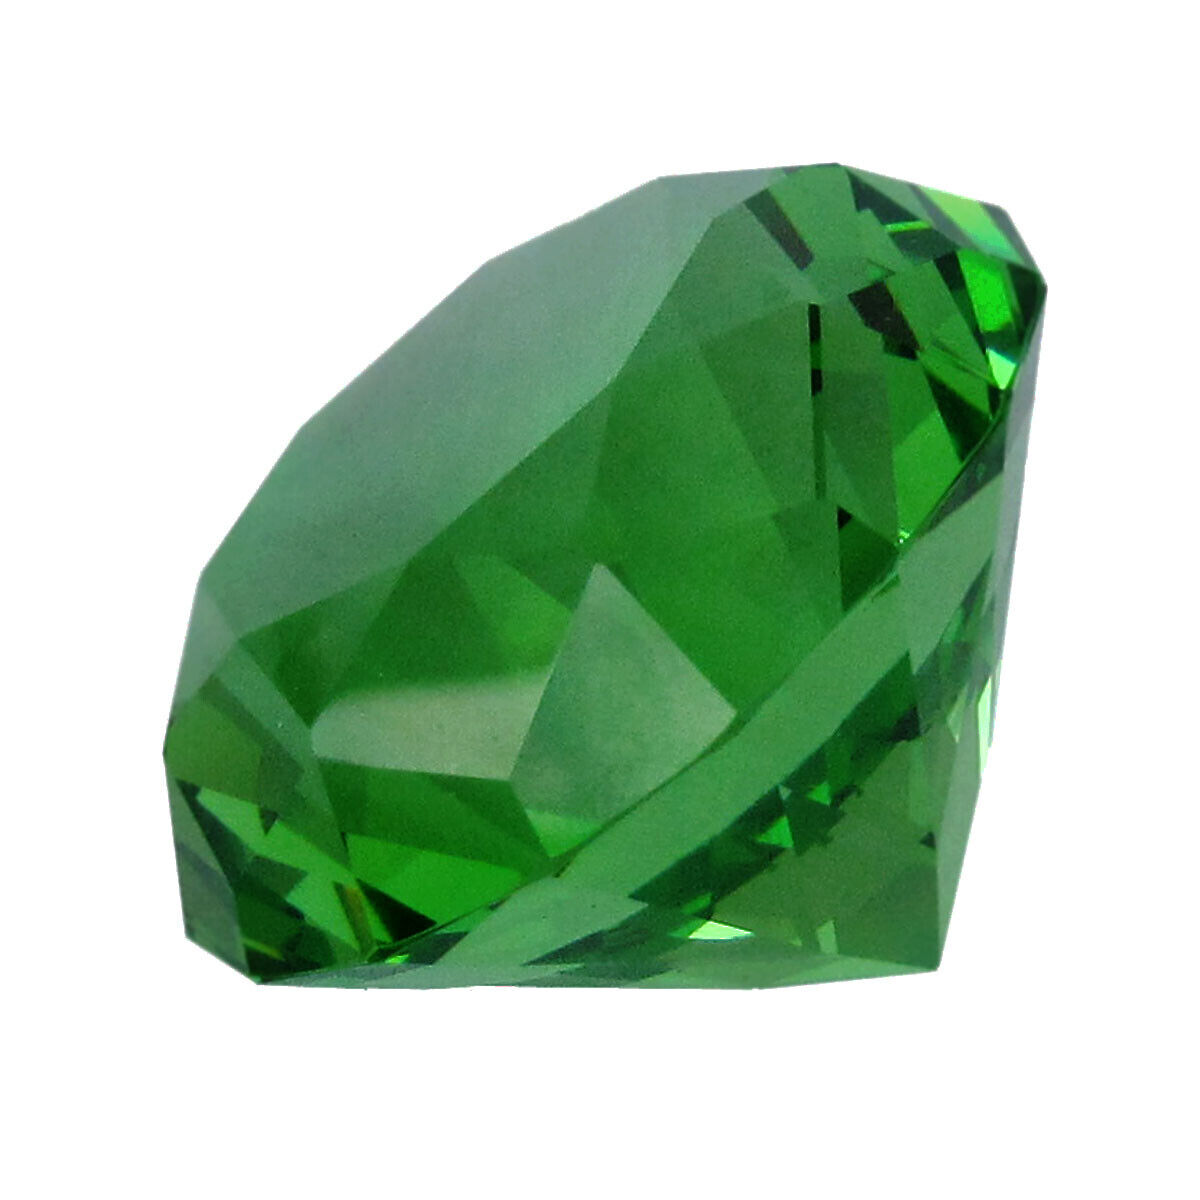 Big 100mm Emerald Green 100 mm Cut Glass Crystal Giant Diamond Jewel Paperweight